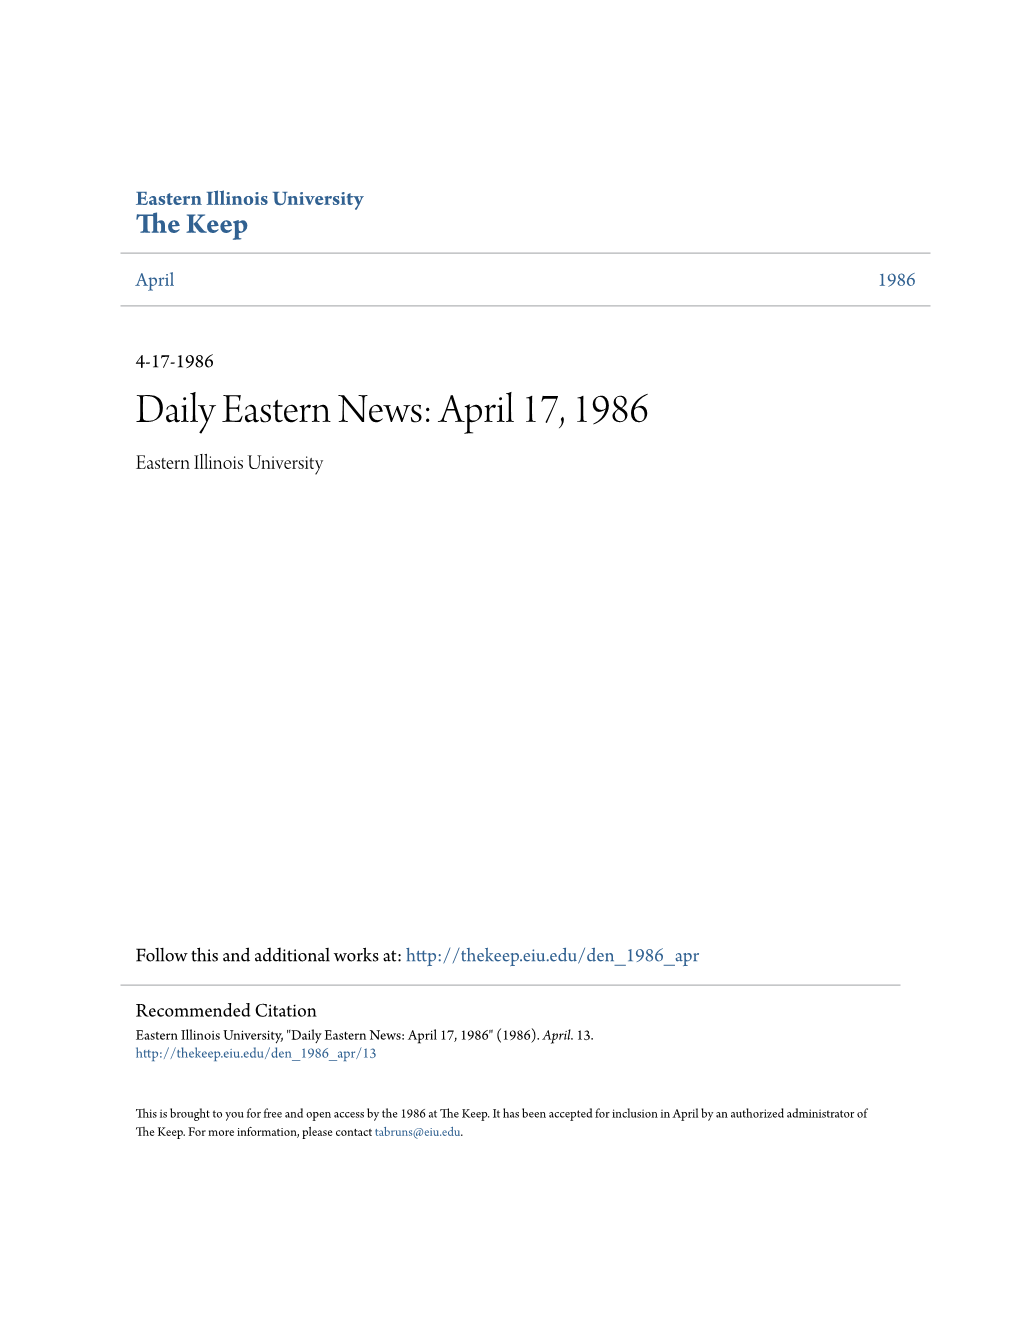 Daily Eastern News: April 17, 1986 Eastern Illinois University